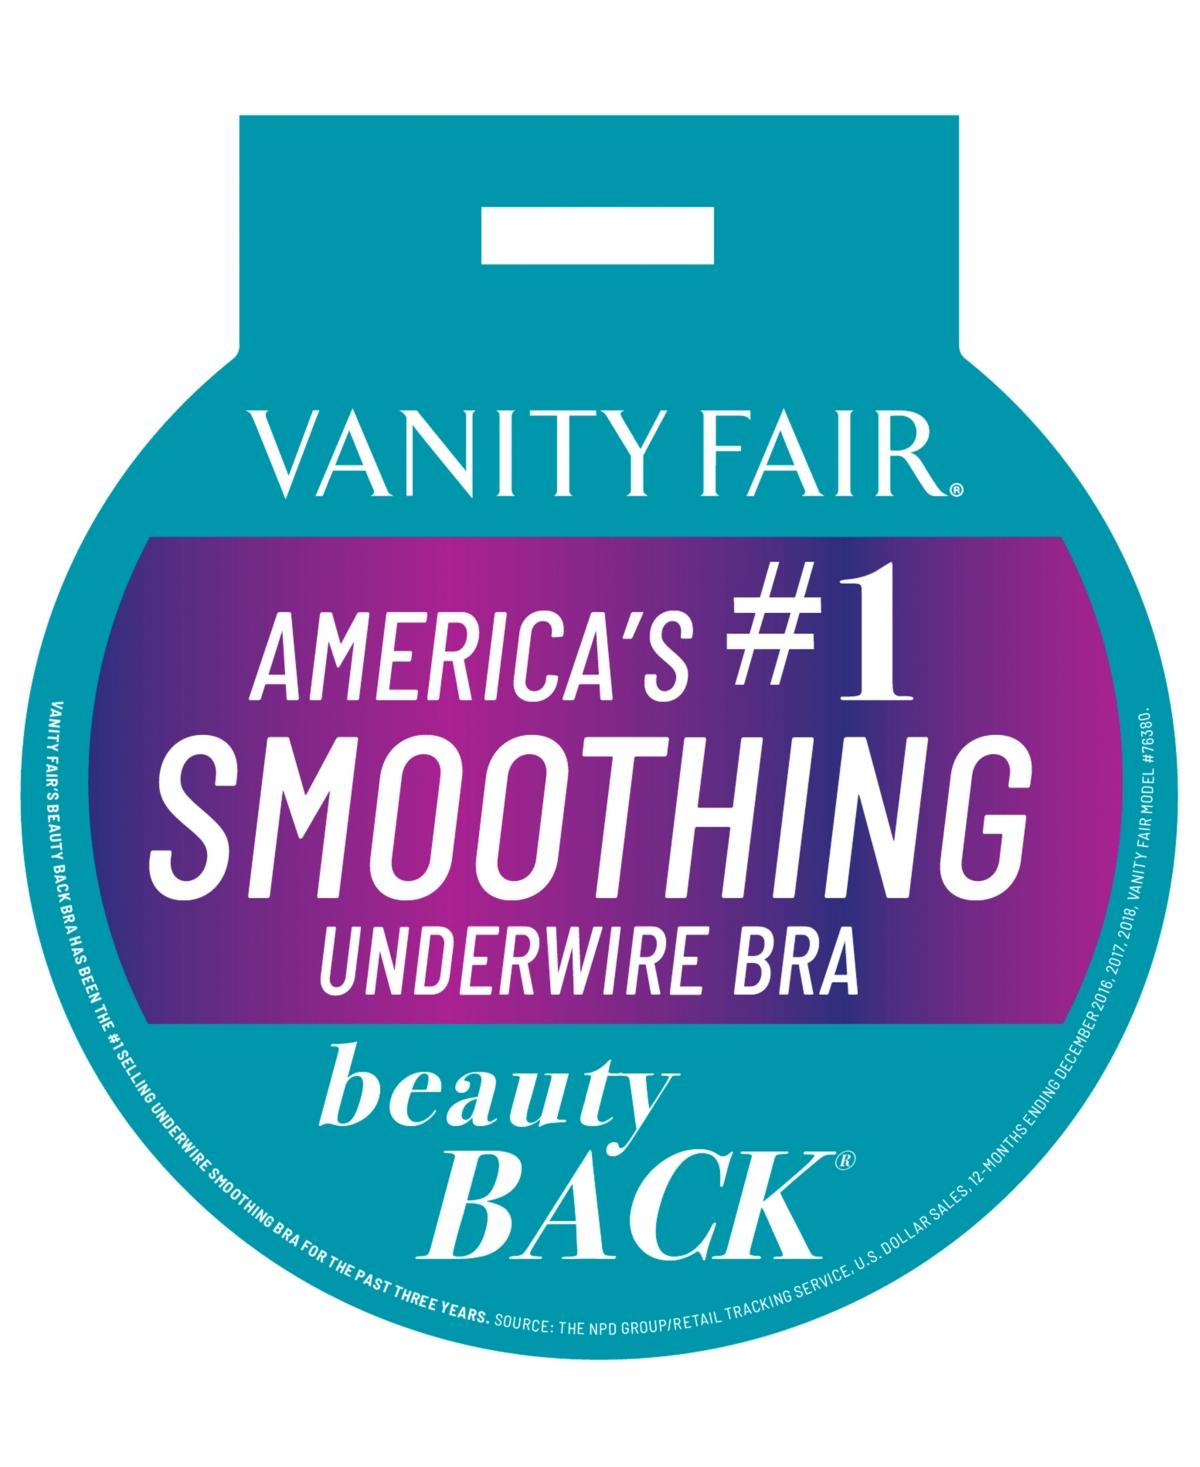 Vanity Fair Beauty Back Smoothing Full-figure Contour Bra 76380 in